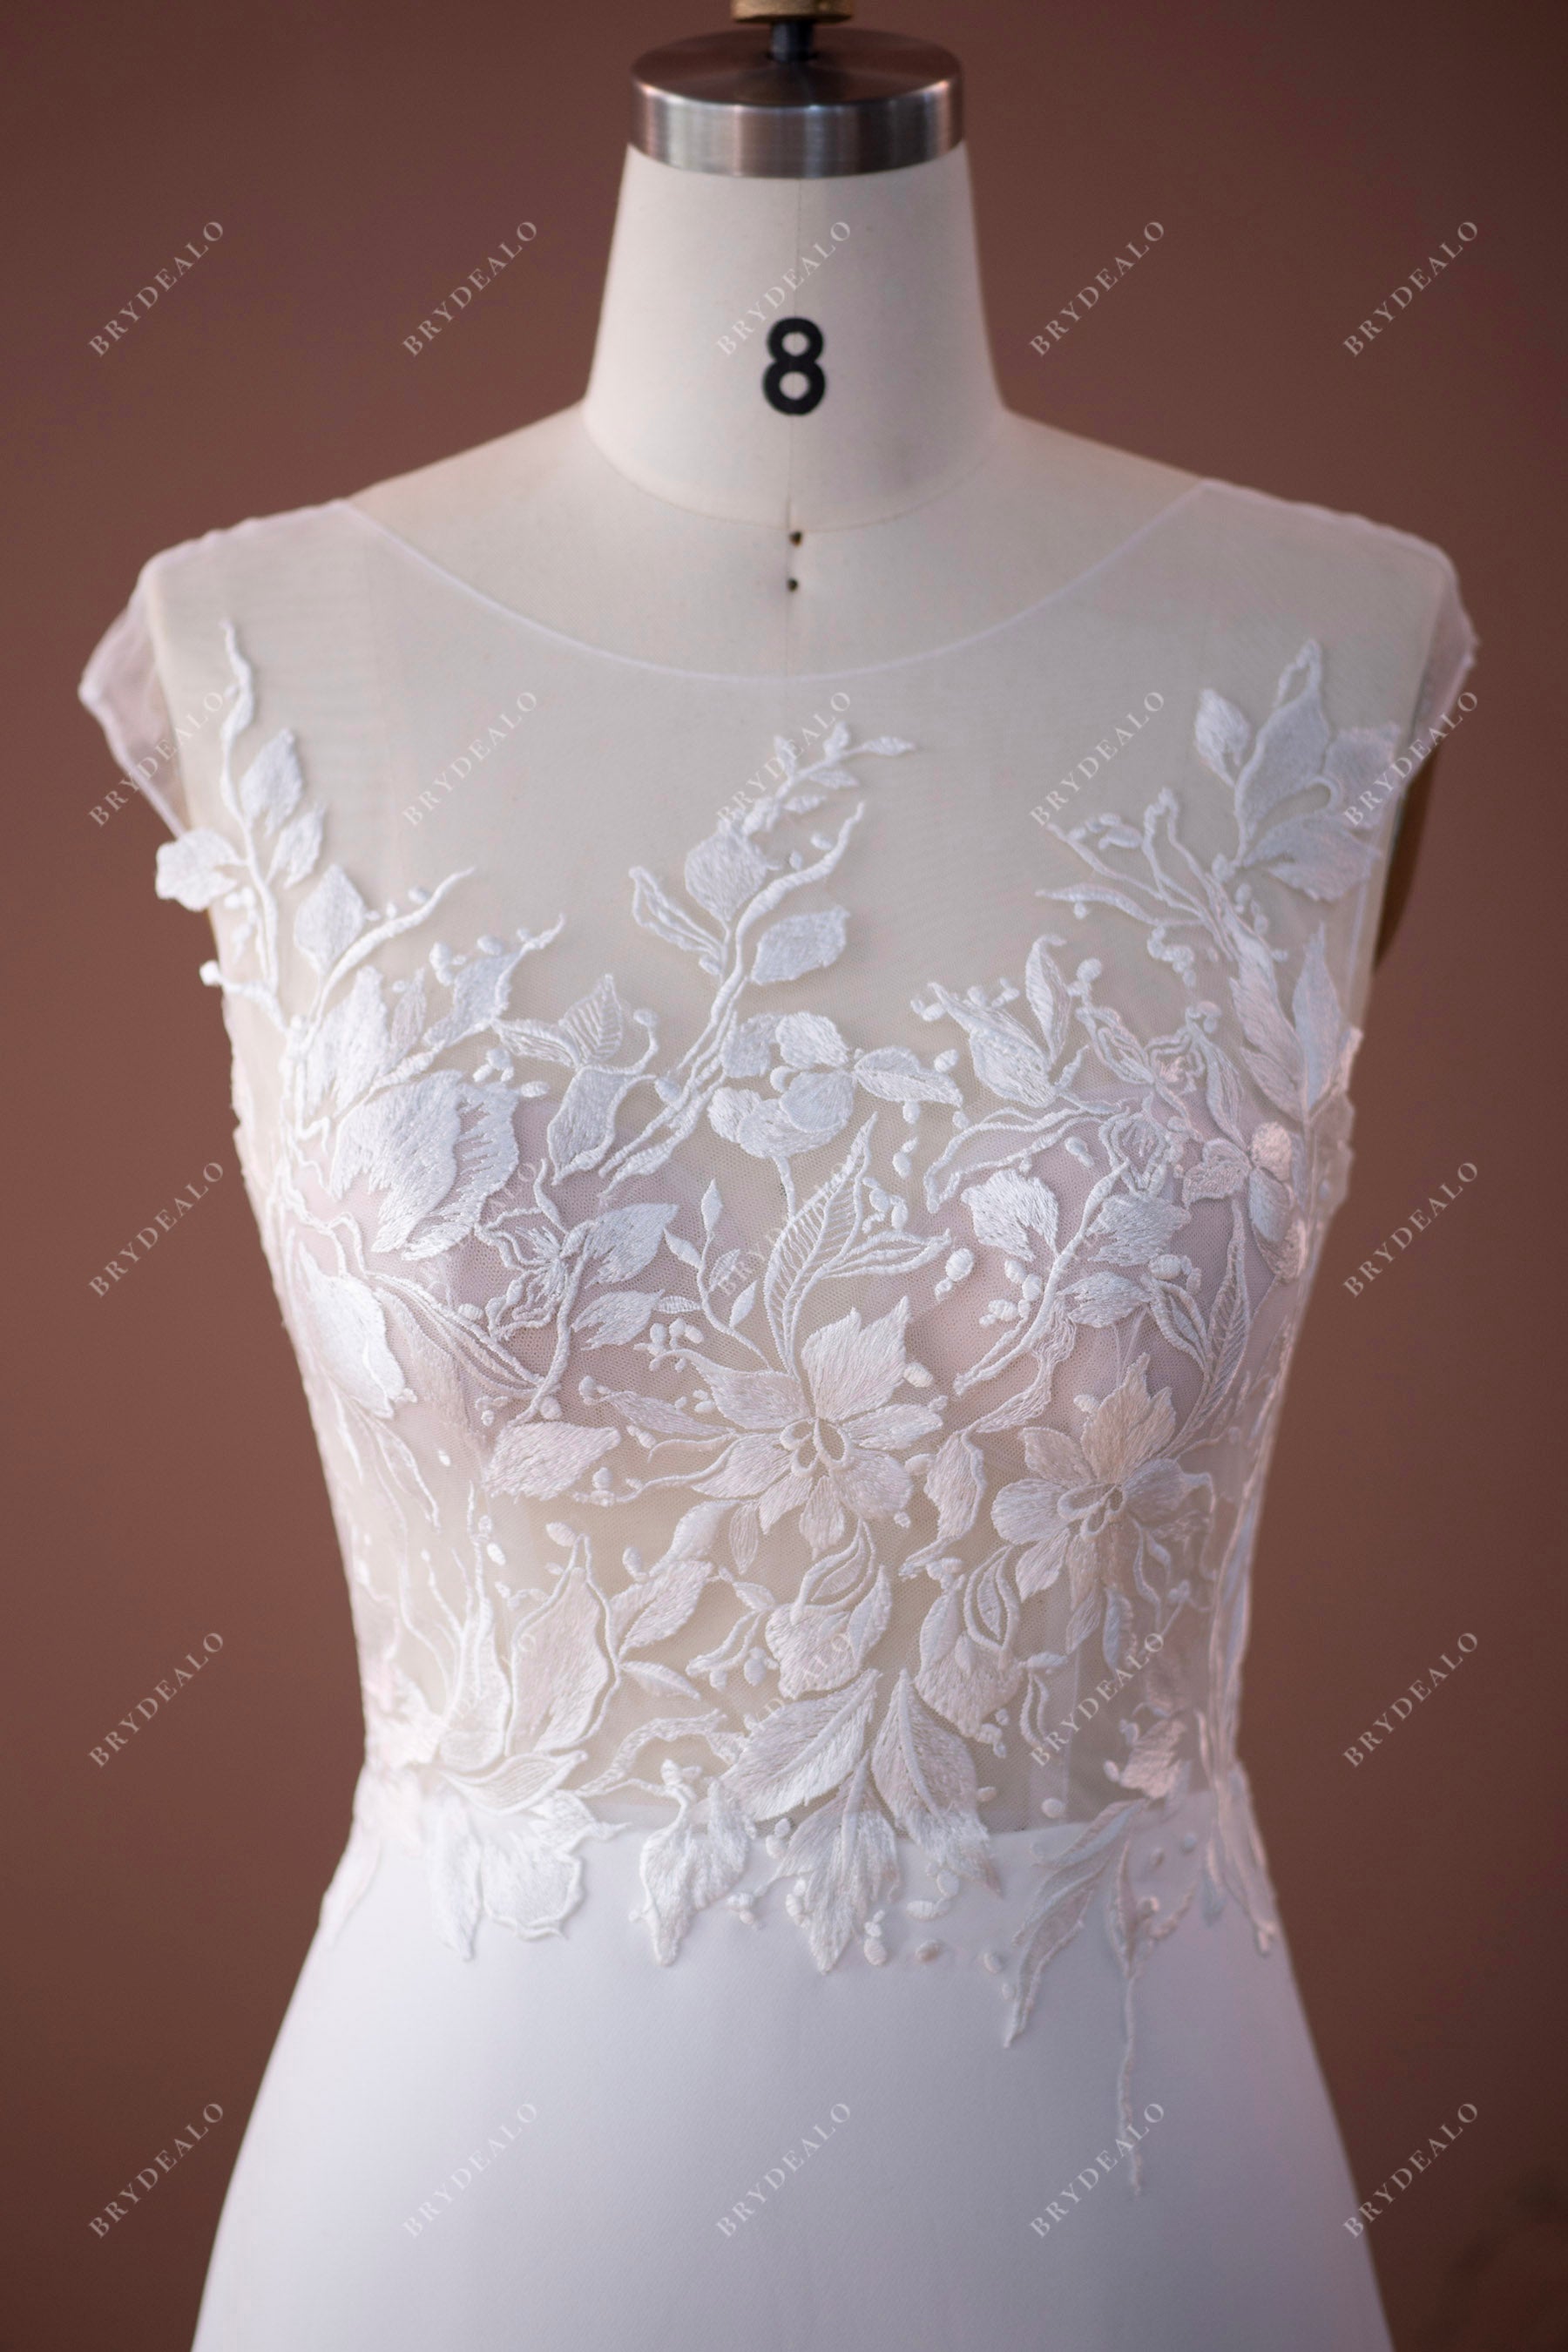 illusion lace top crepe bridal gown